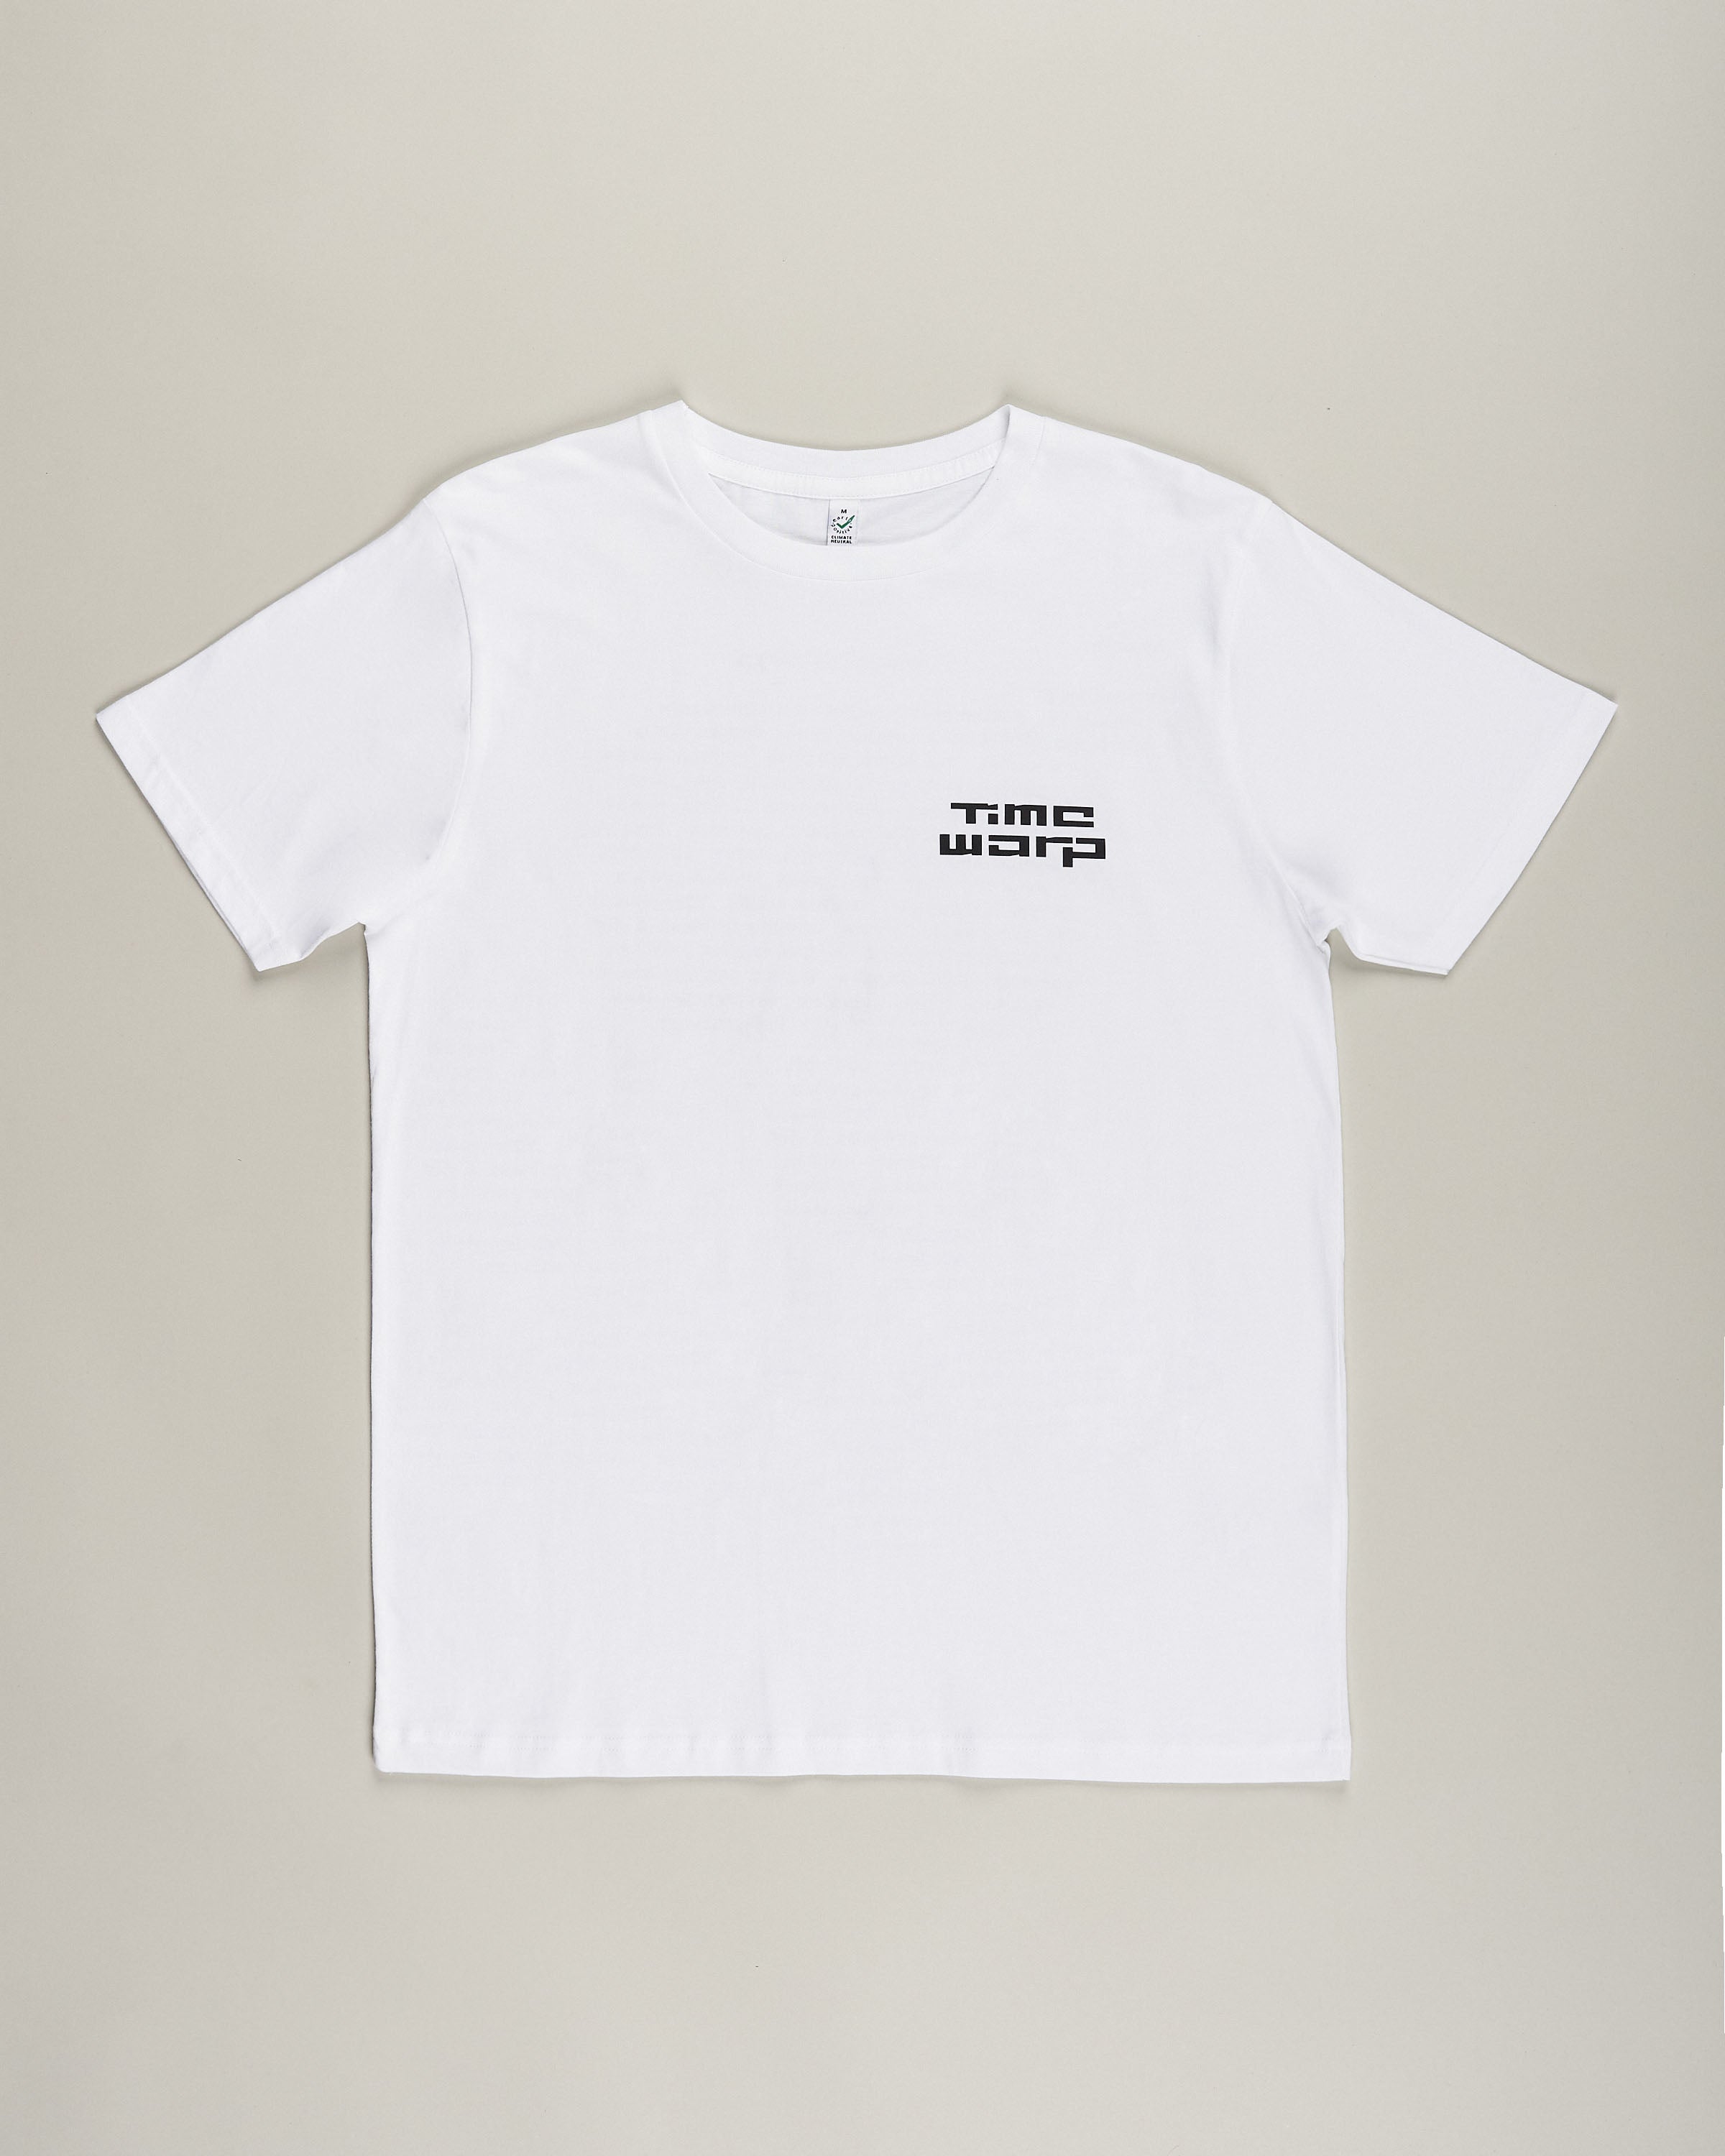 Time Warp Line-up-T-Shirt 2020, white